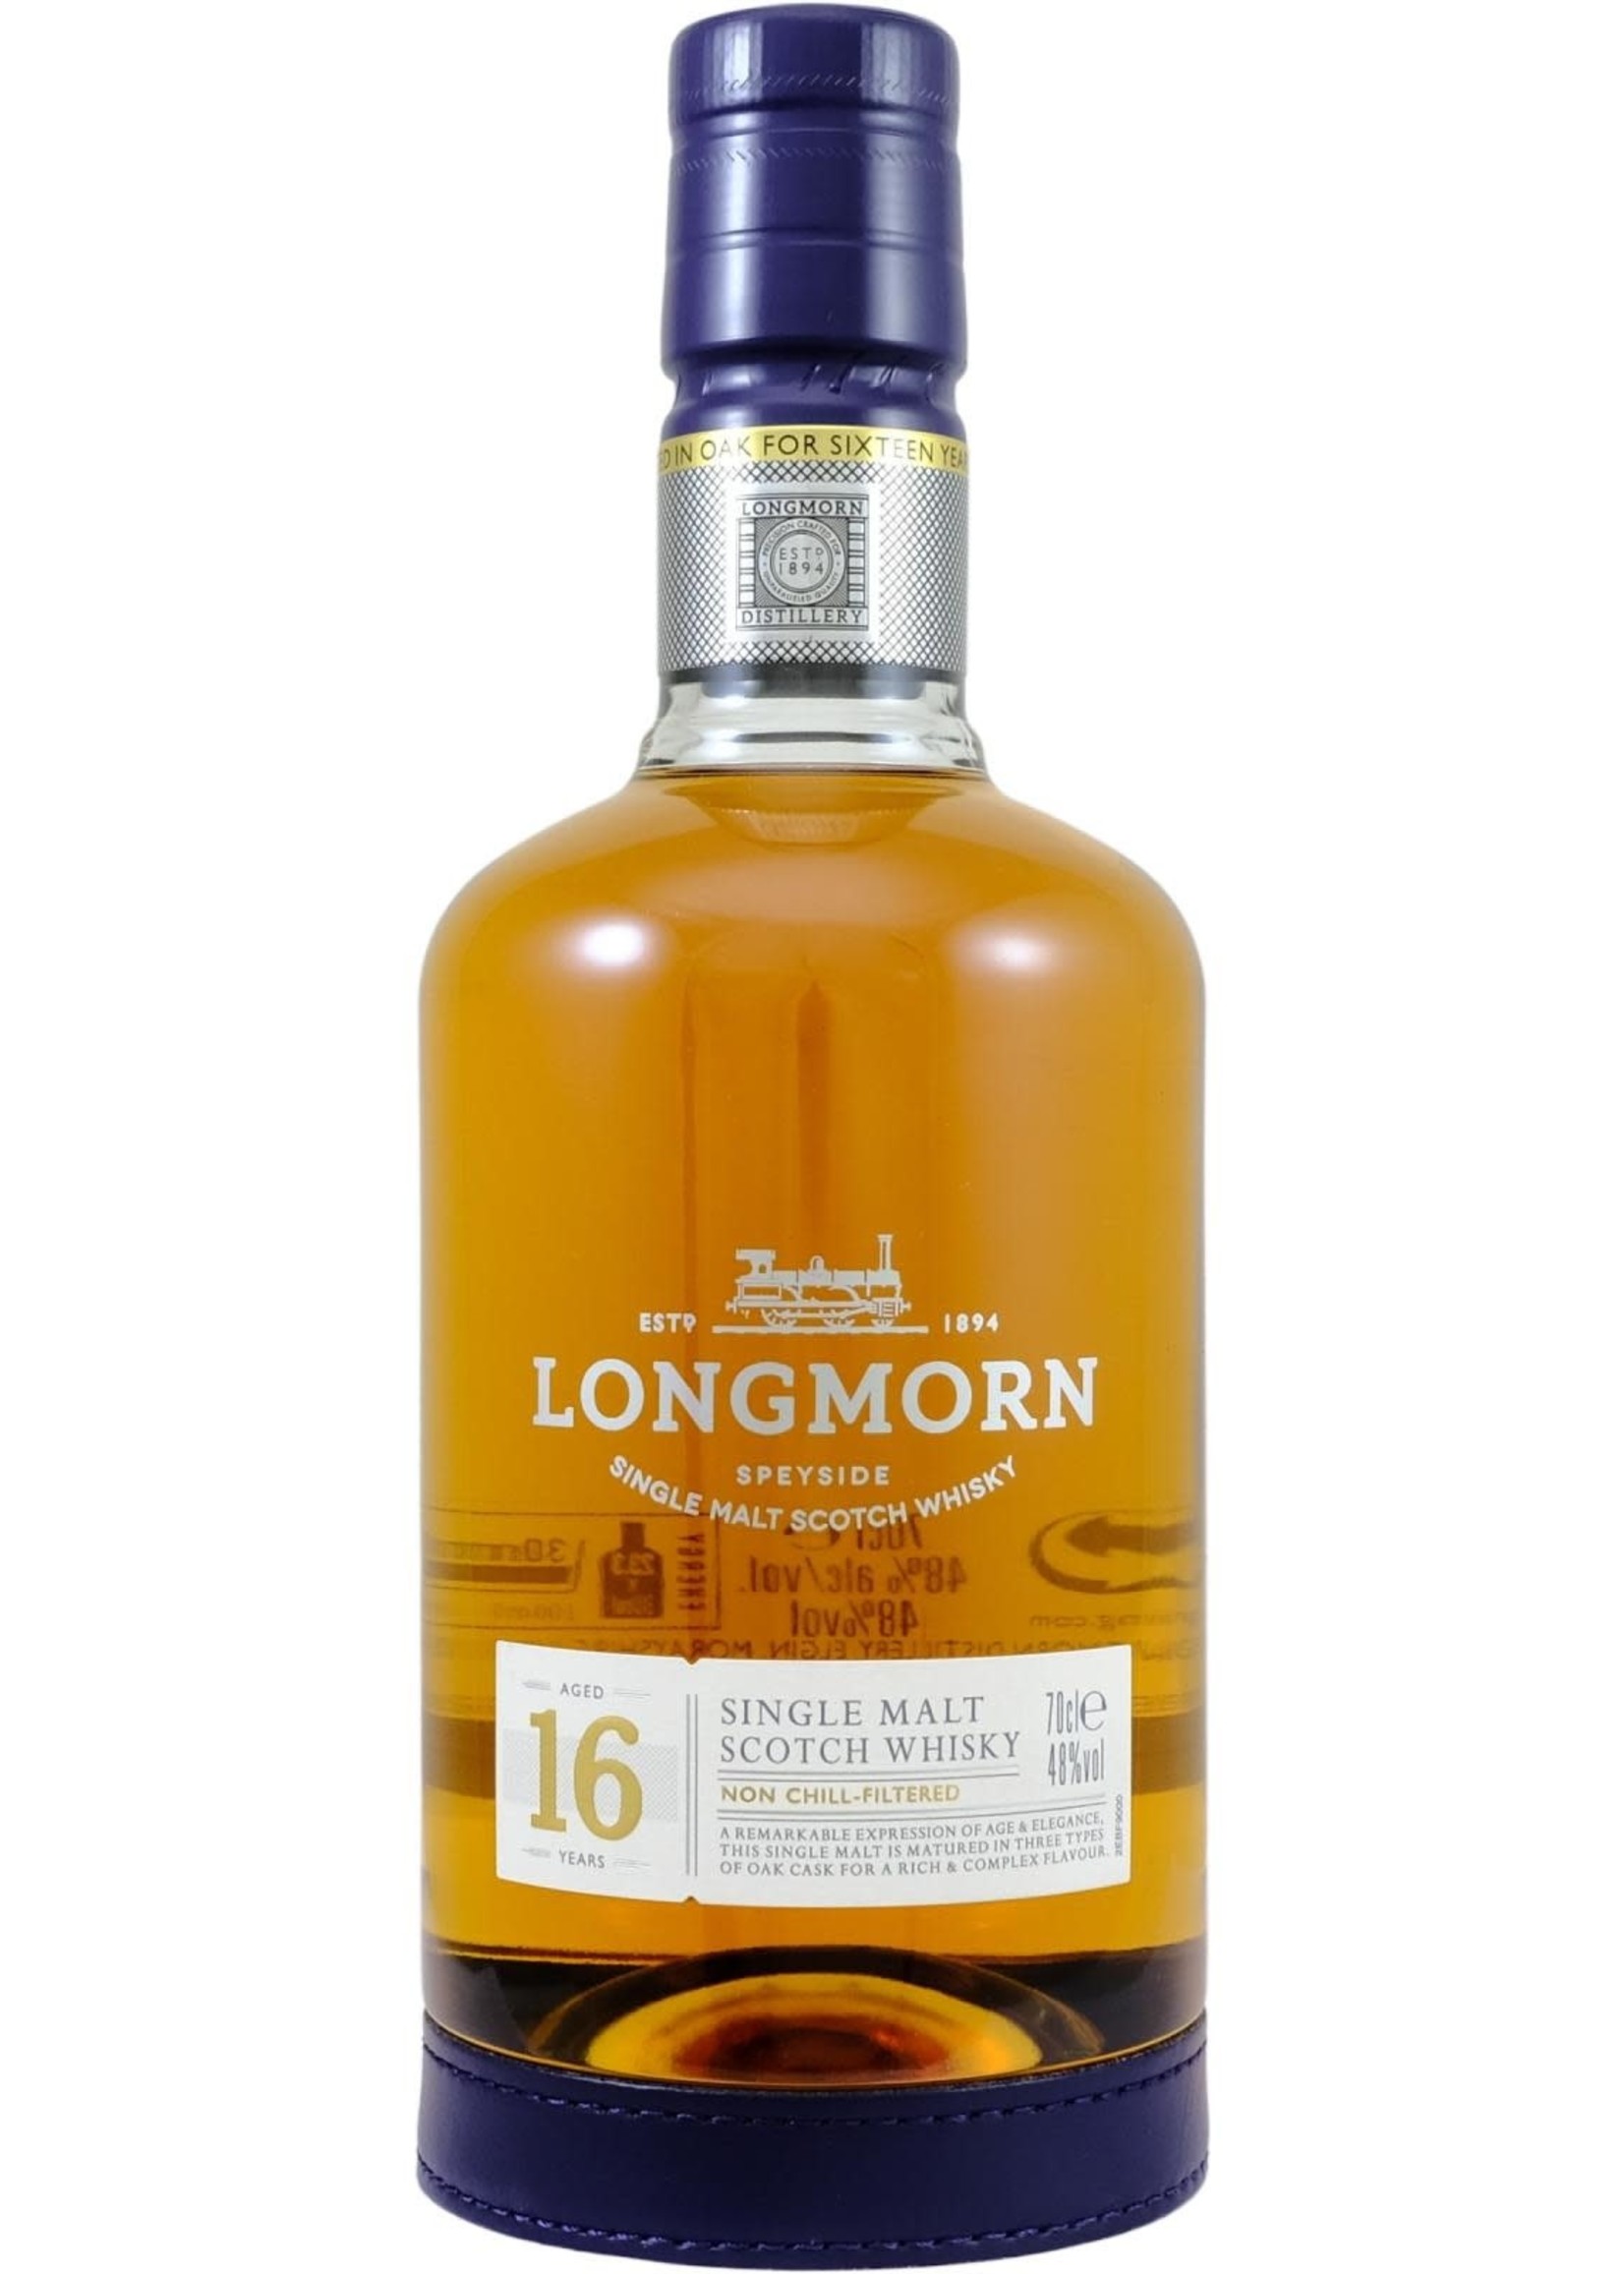 Longmorn Longmorn / 16 Year Old Single Malt Scotch Whisky 48% / 750mL